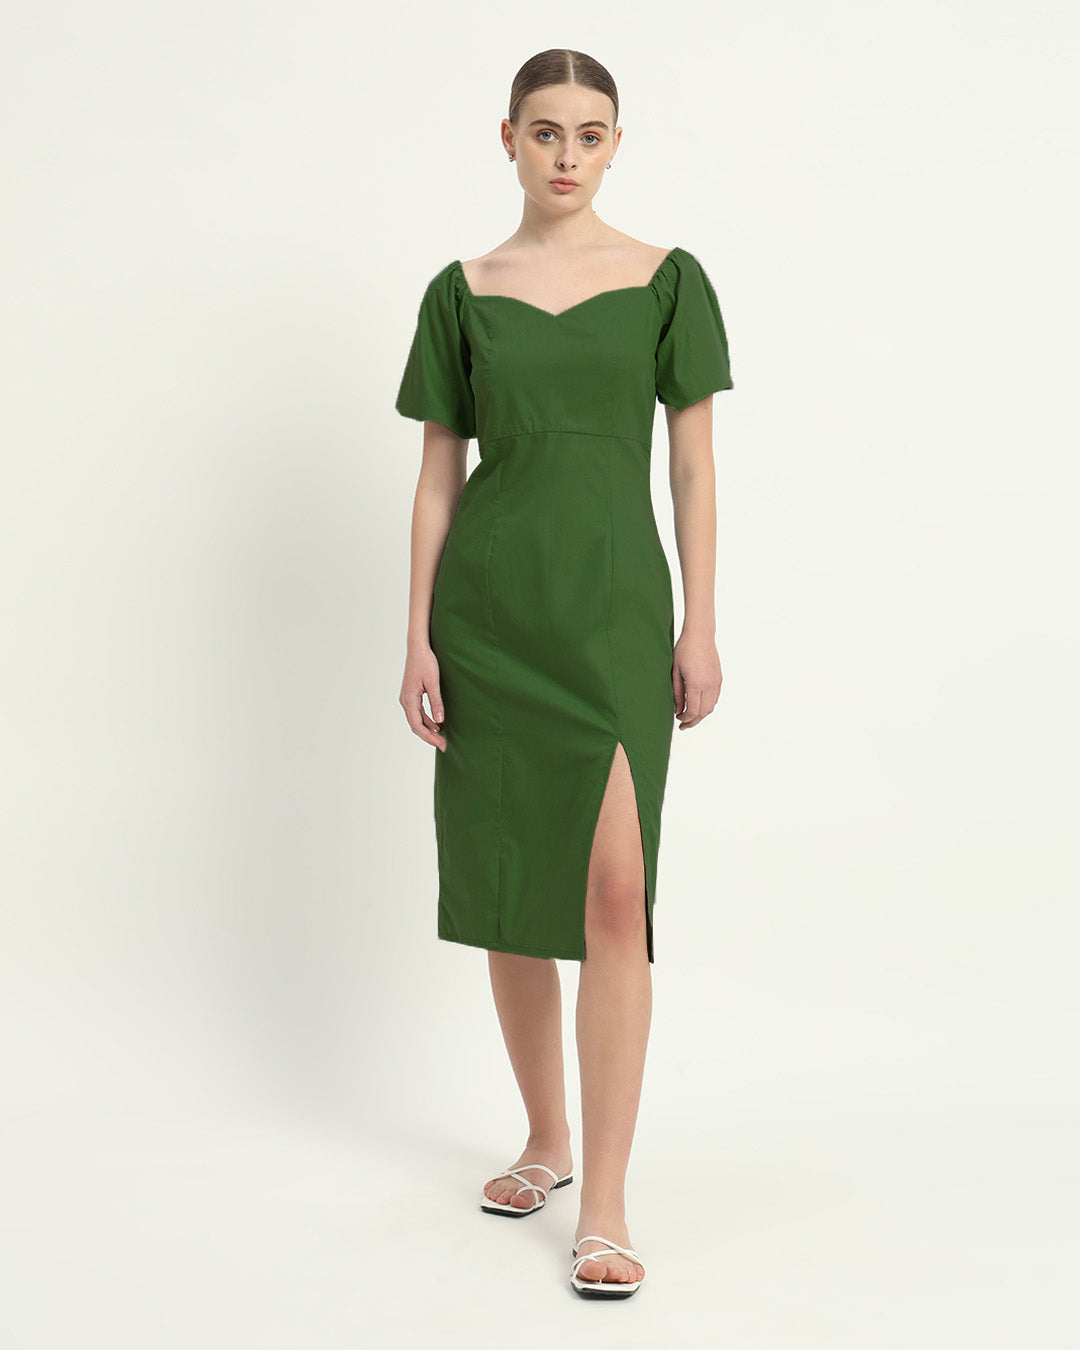 The Erwin Emerald Cotton Dress